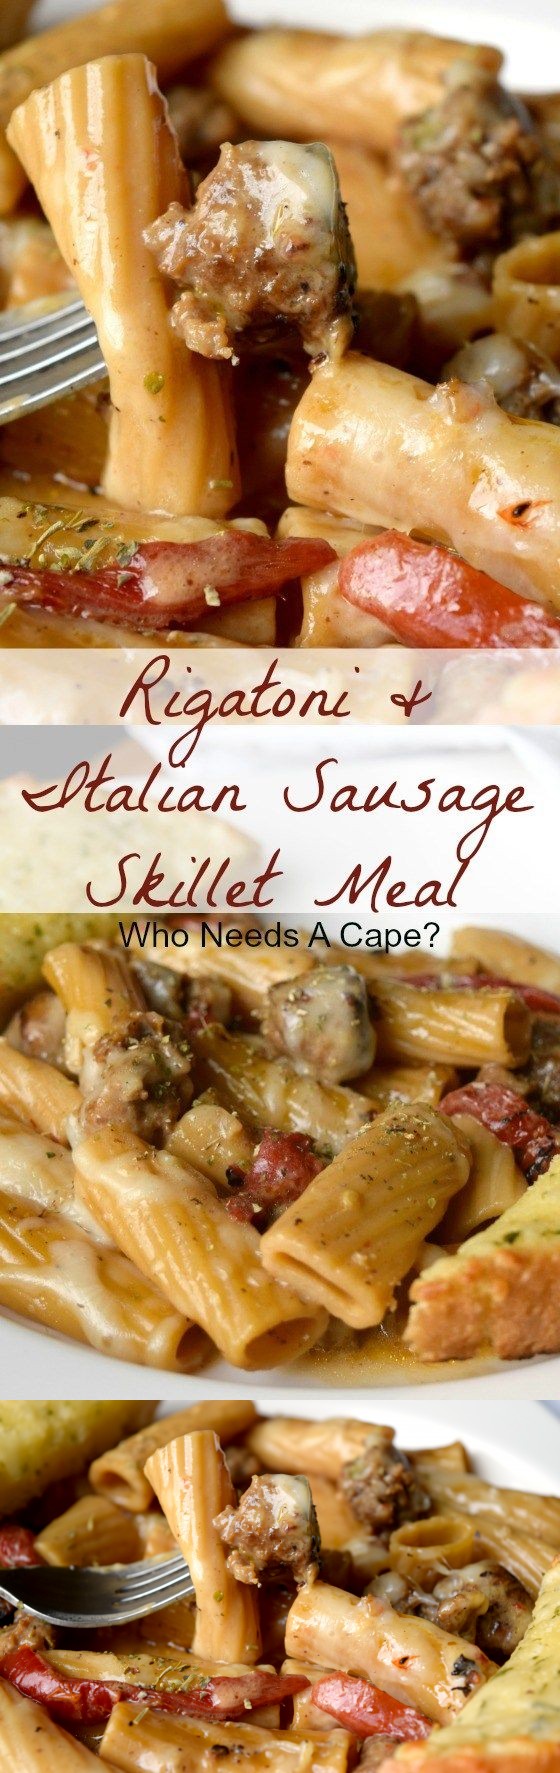 Rigatoni & Italian Sausage Skillet Meal